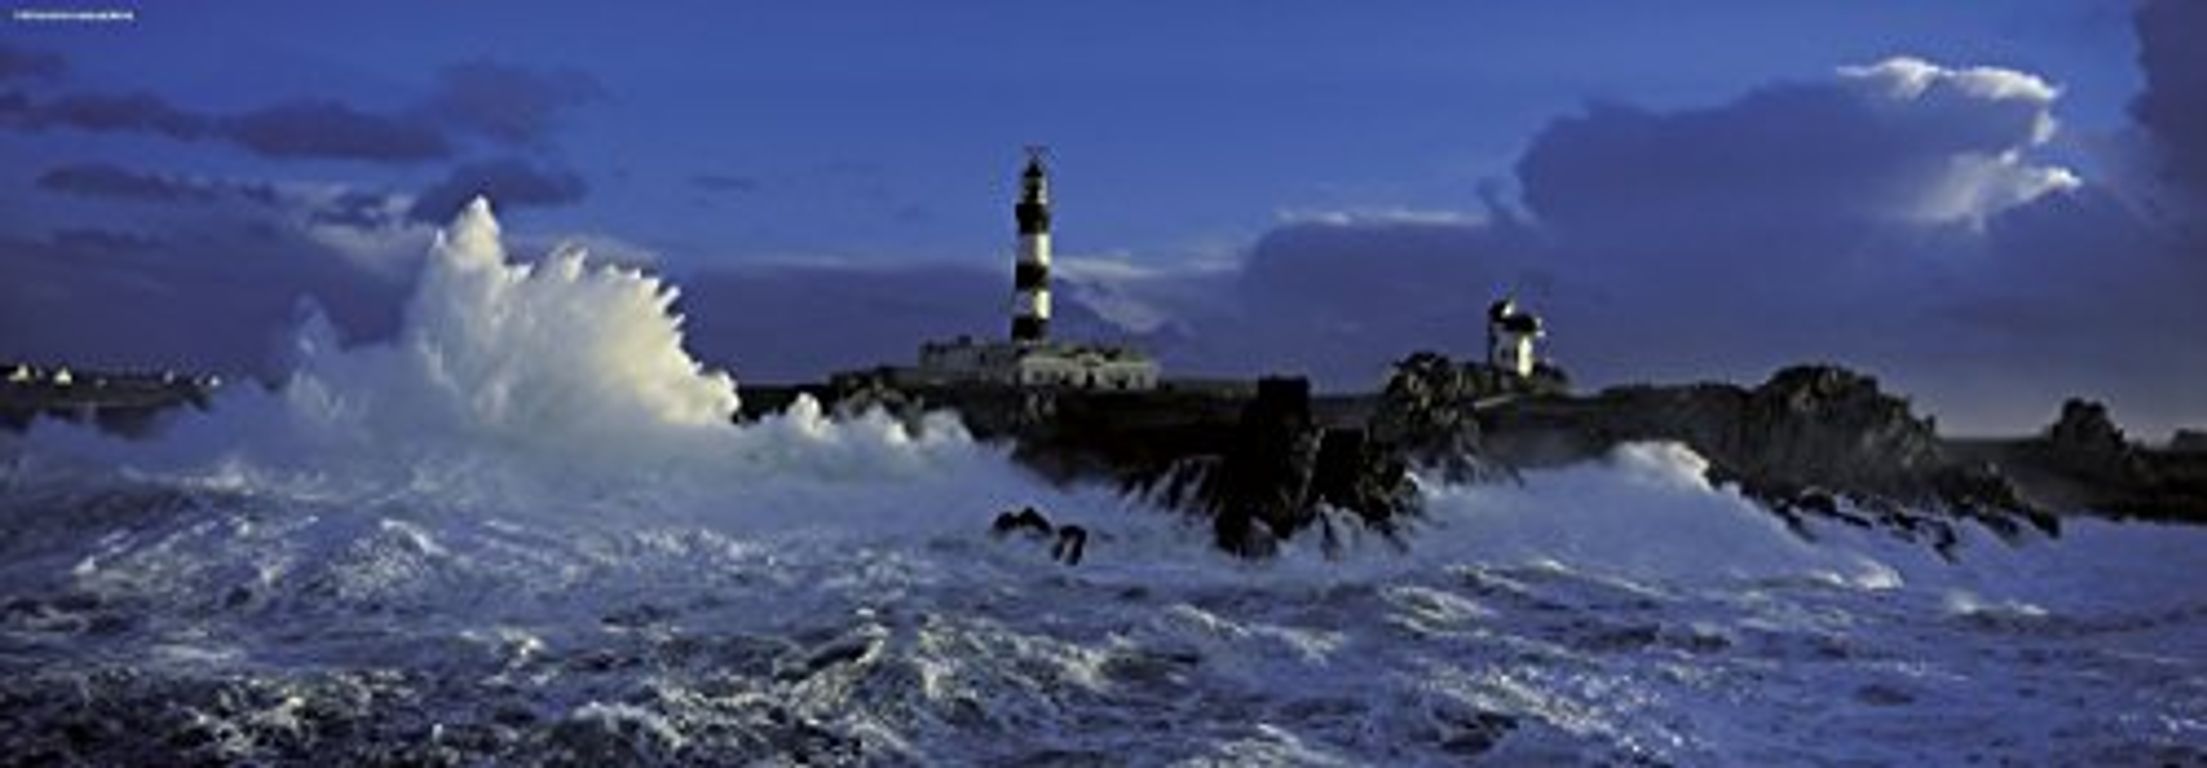 Lighthouse Le Créac'h